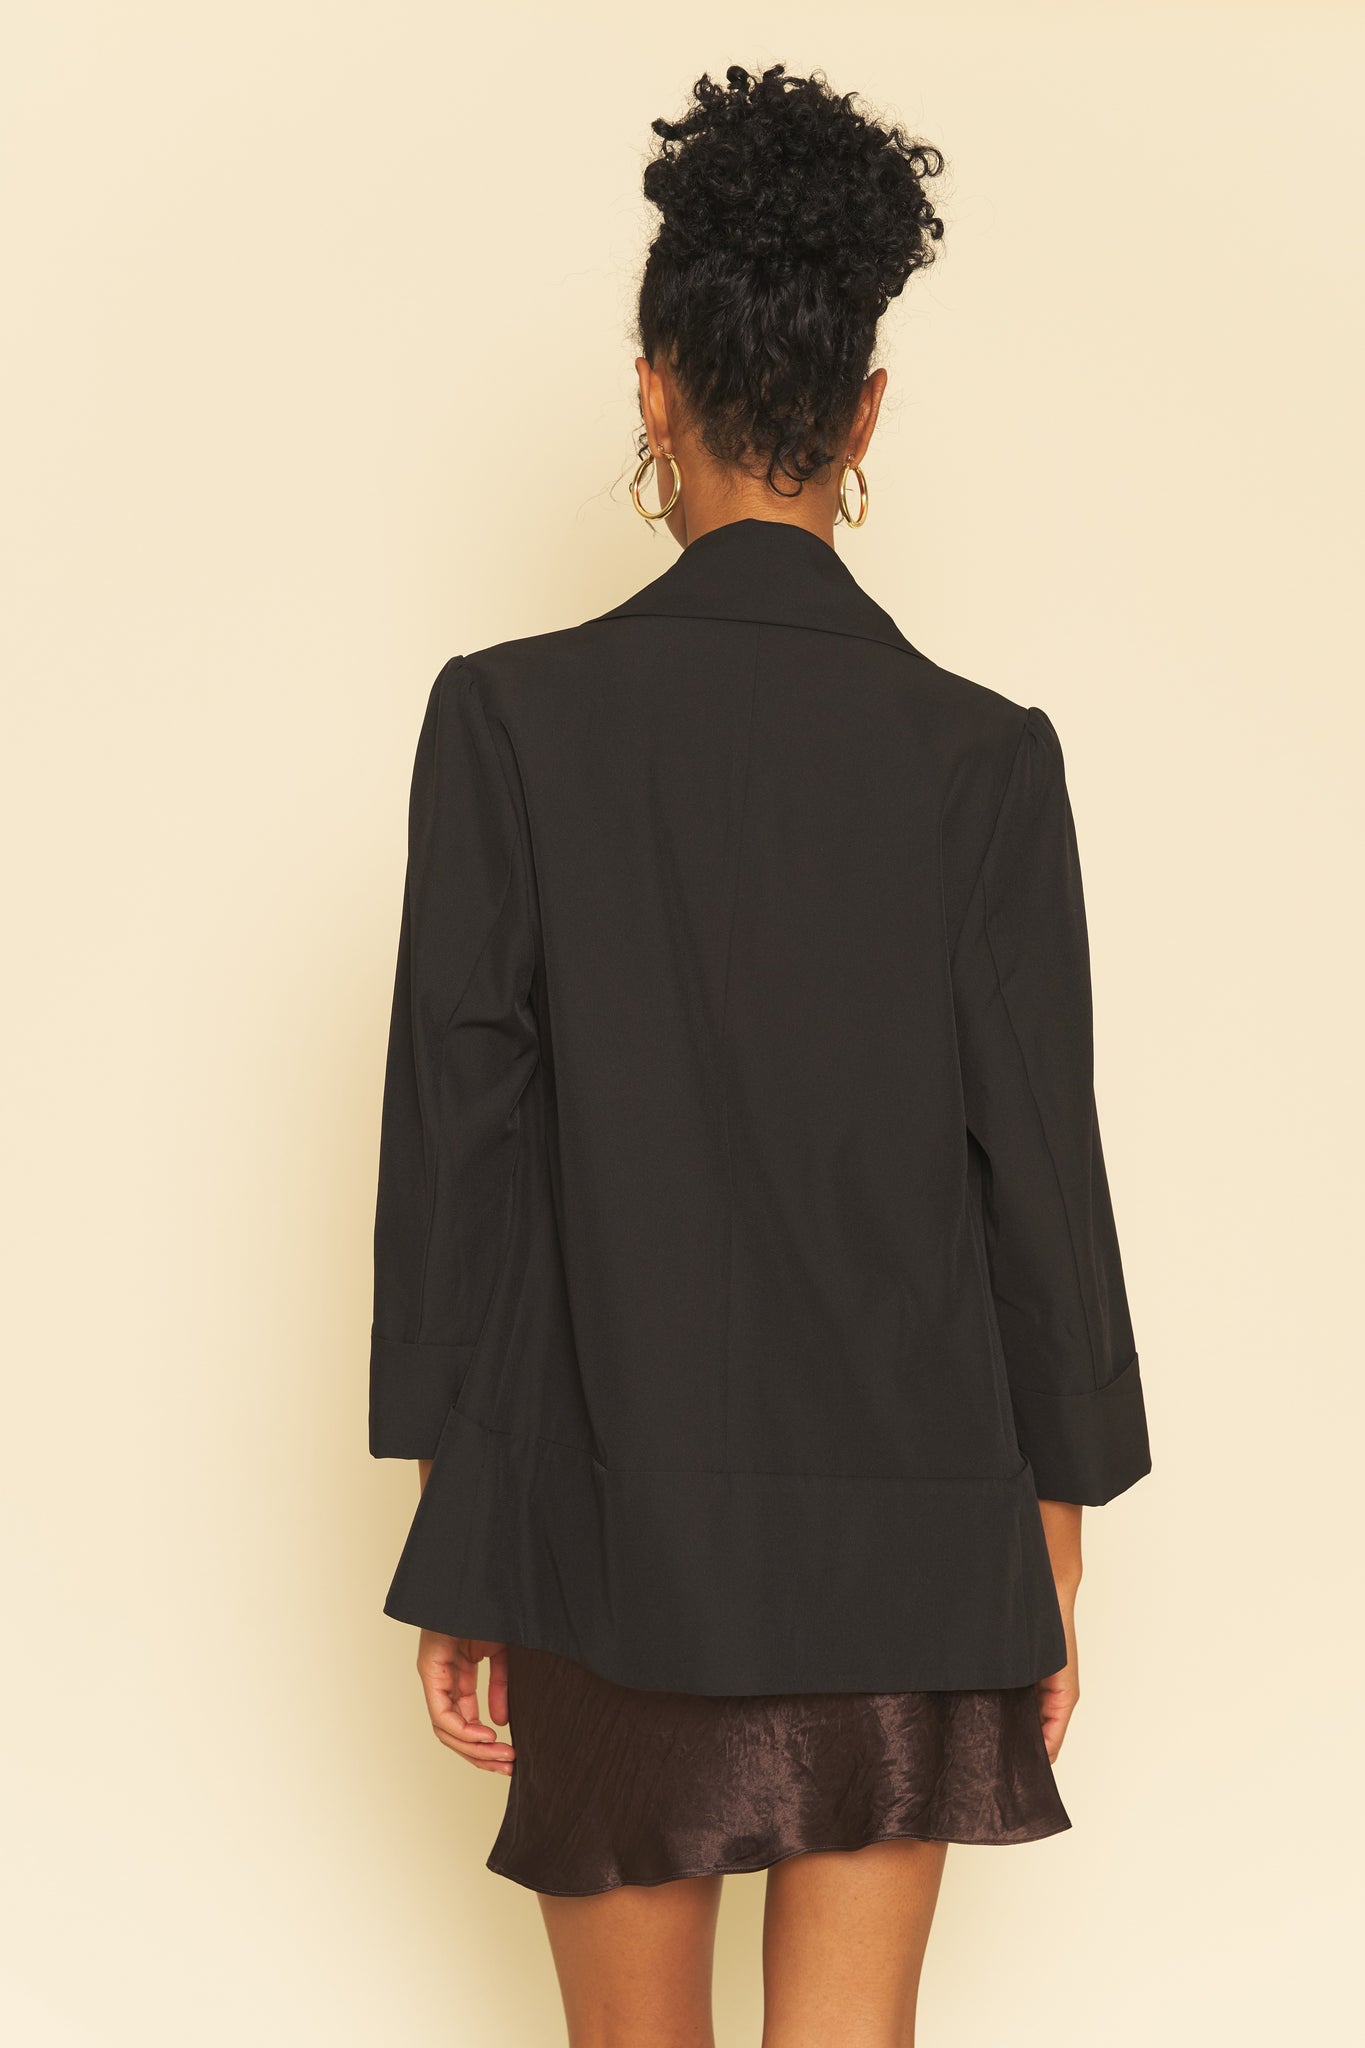 Melanie woven jacket, shawl jacket, open front, black color